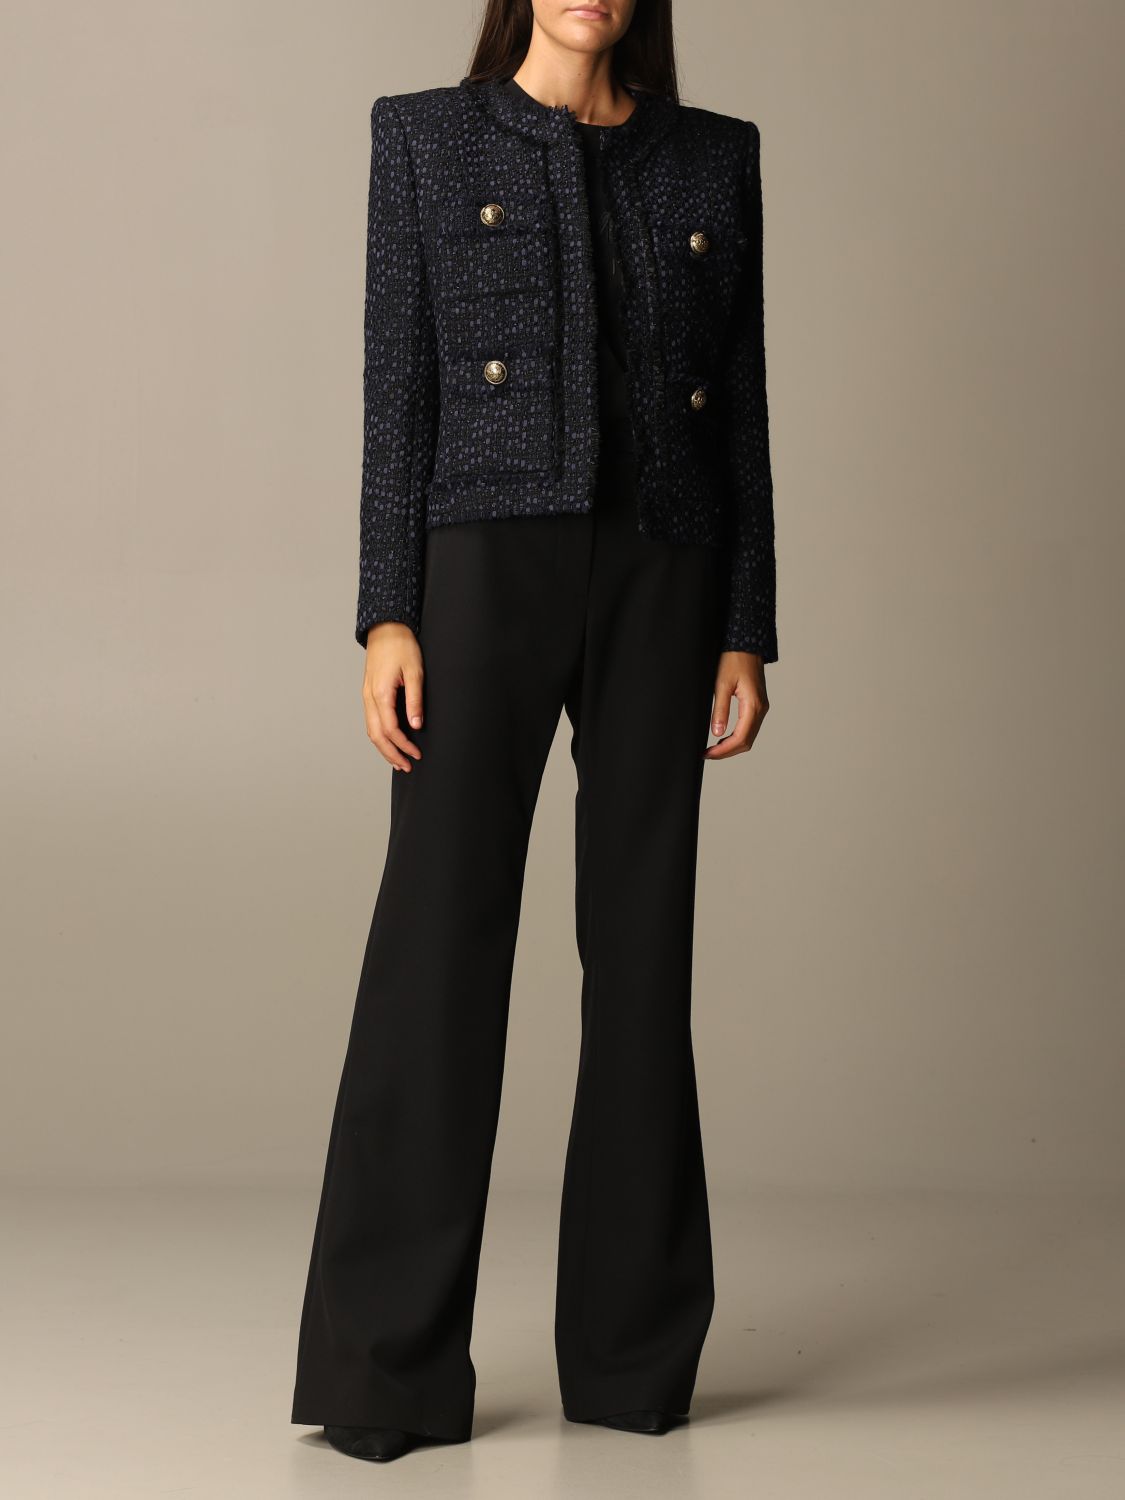 BALMAIN: tweed jacket with pads - Blue | Balmain blazer UF17532X396 online at